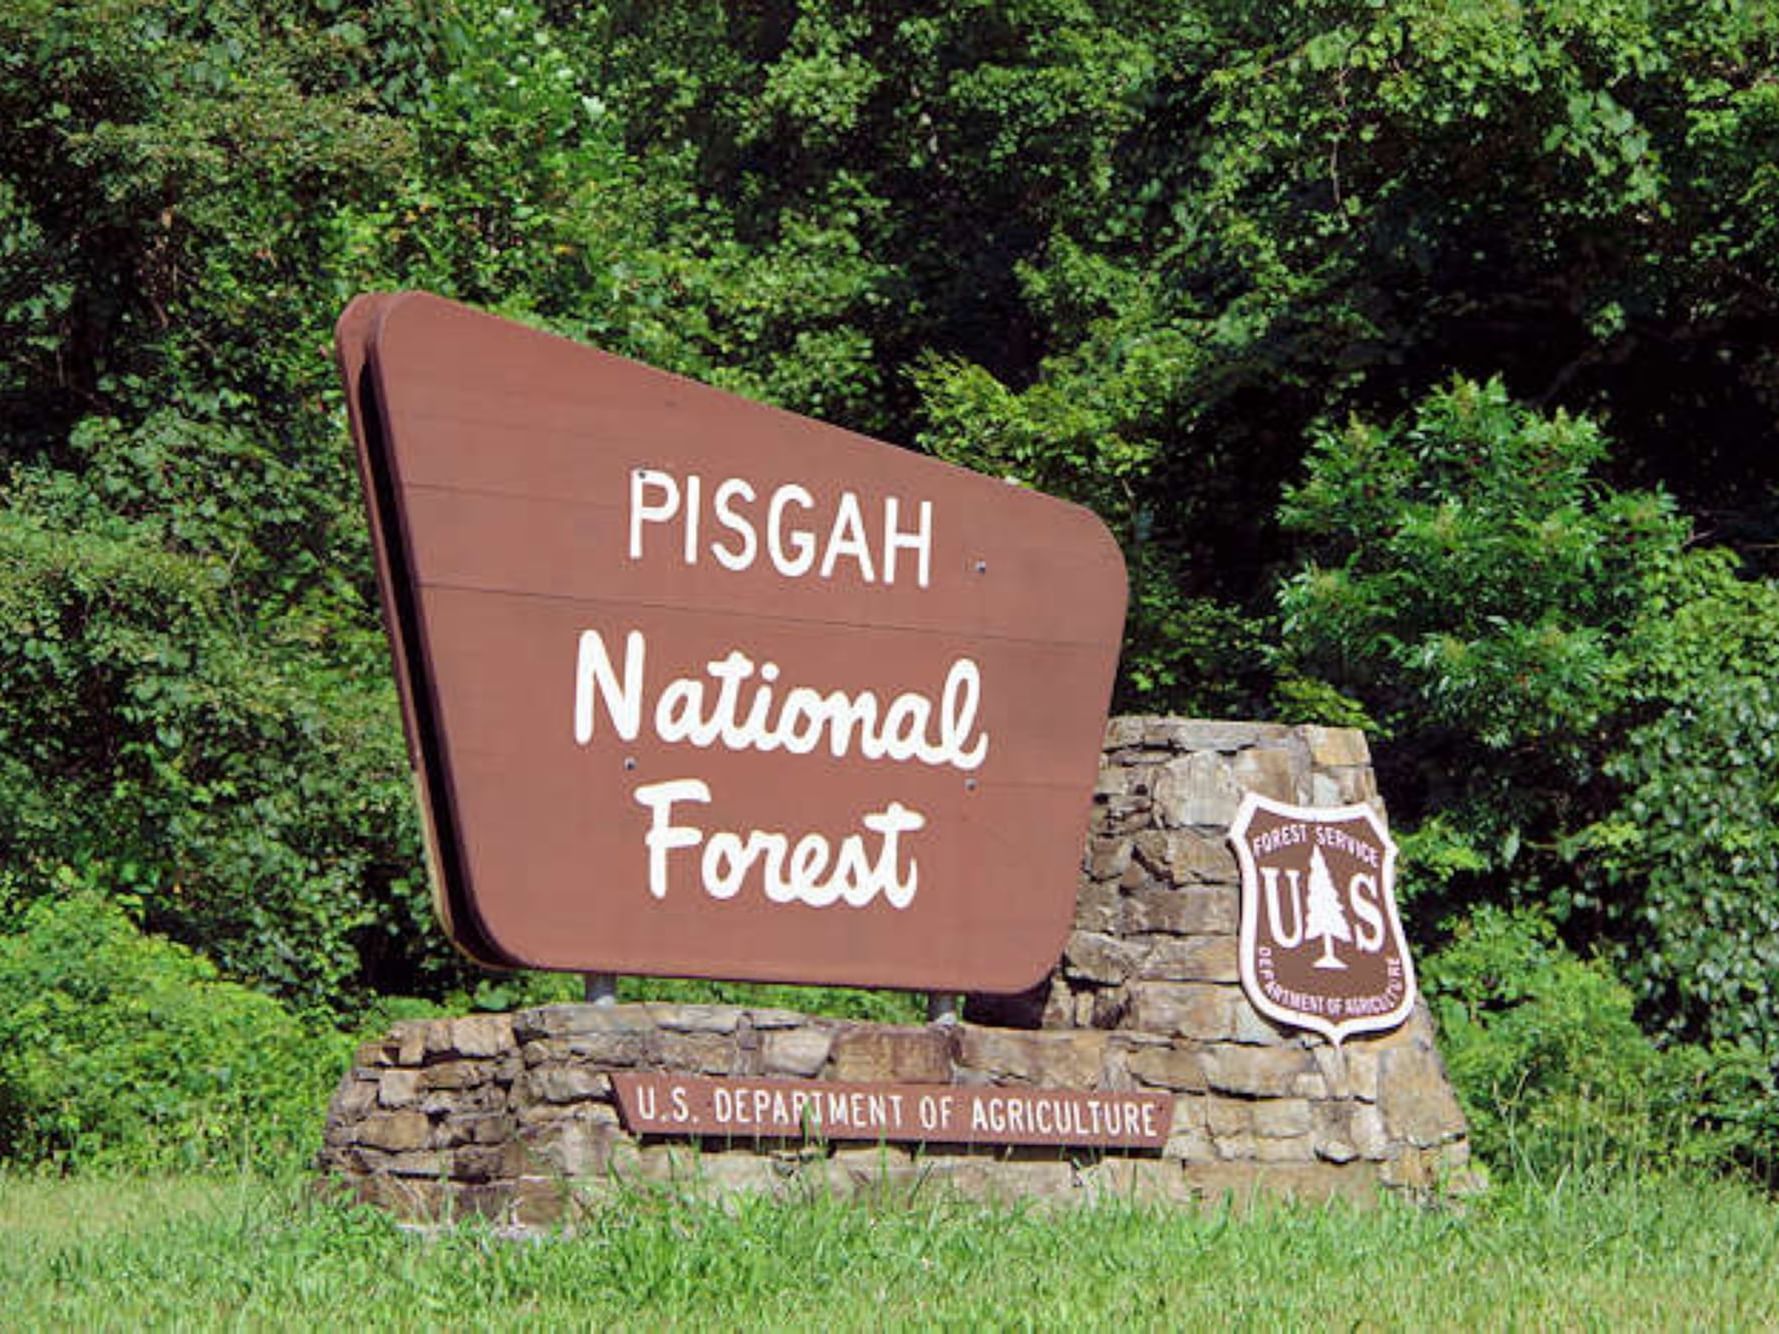 Pisgah National Forest board near Mountain Inn & Suites